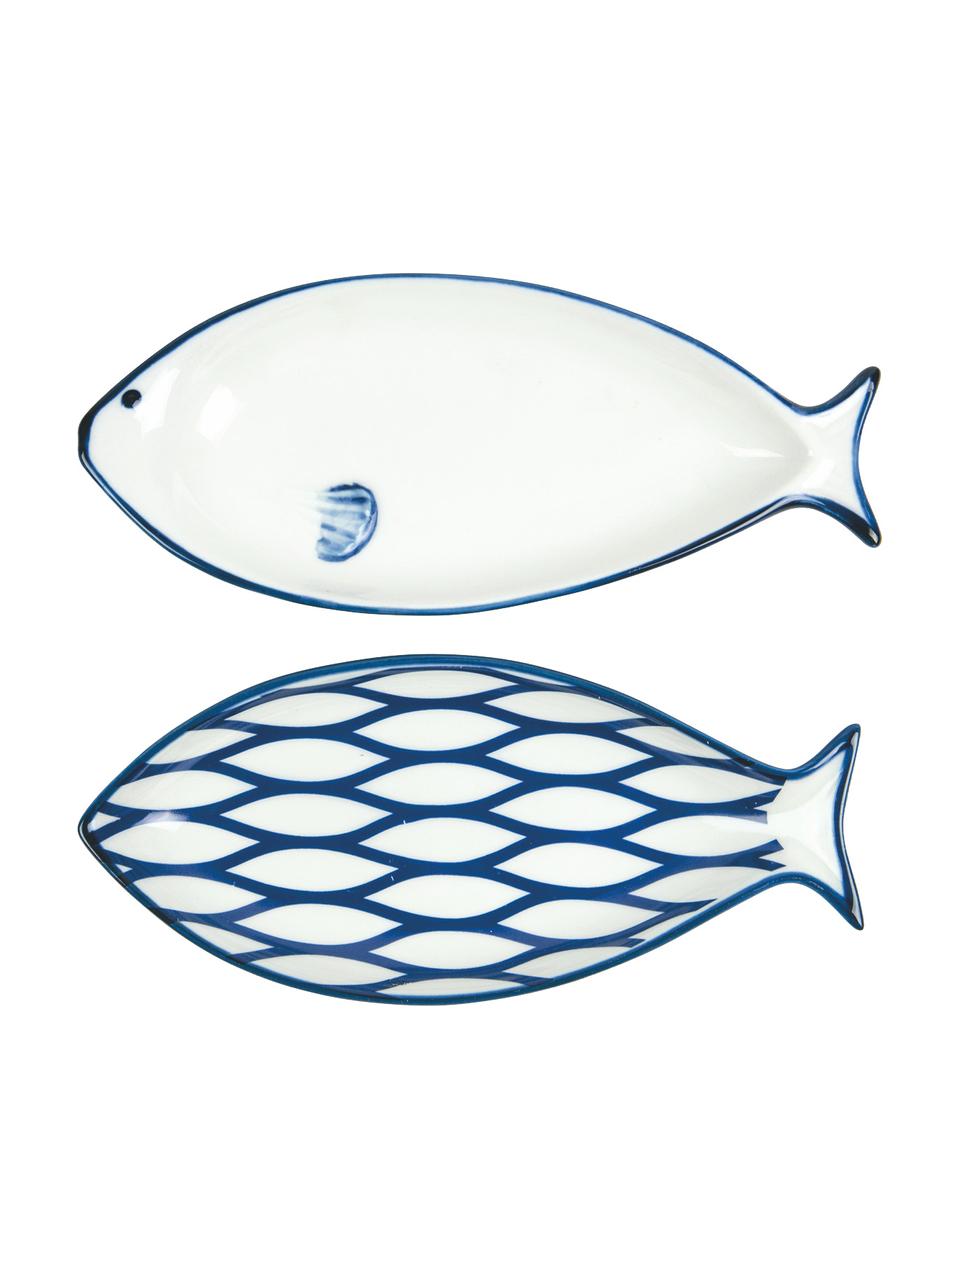 Súprava servírovacích podnosov z porcelánu Fish, 18 x 8 cm, 2 diely, Porcelán, Biela, modrá, D 18 x Š 8 cm